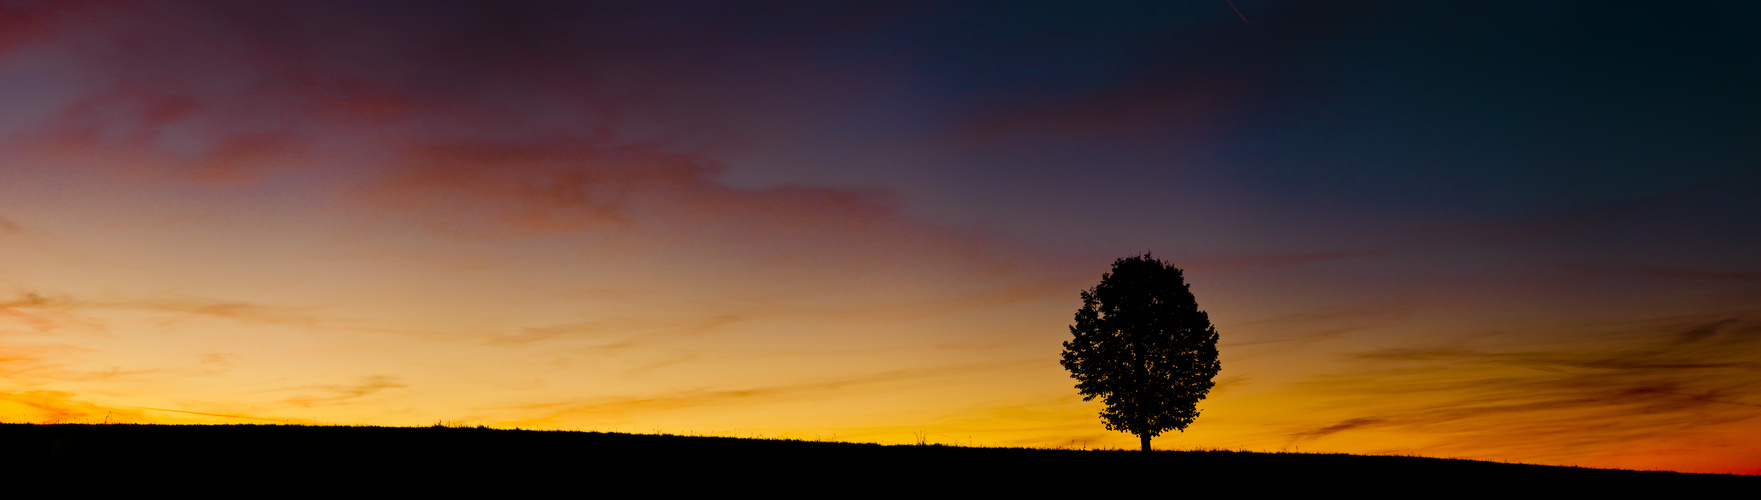 Baum im Morgenrot